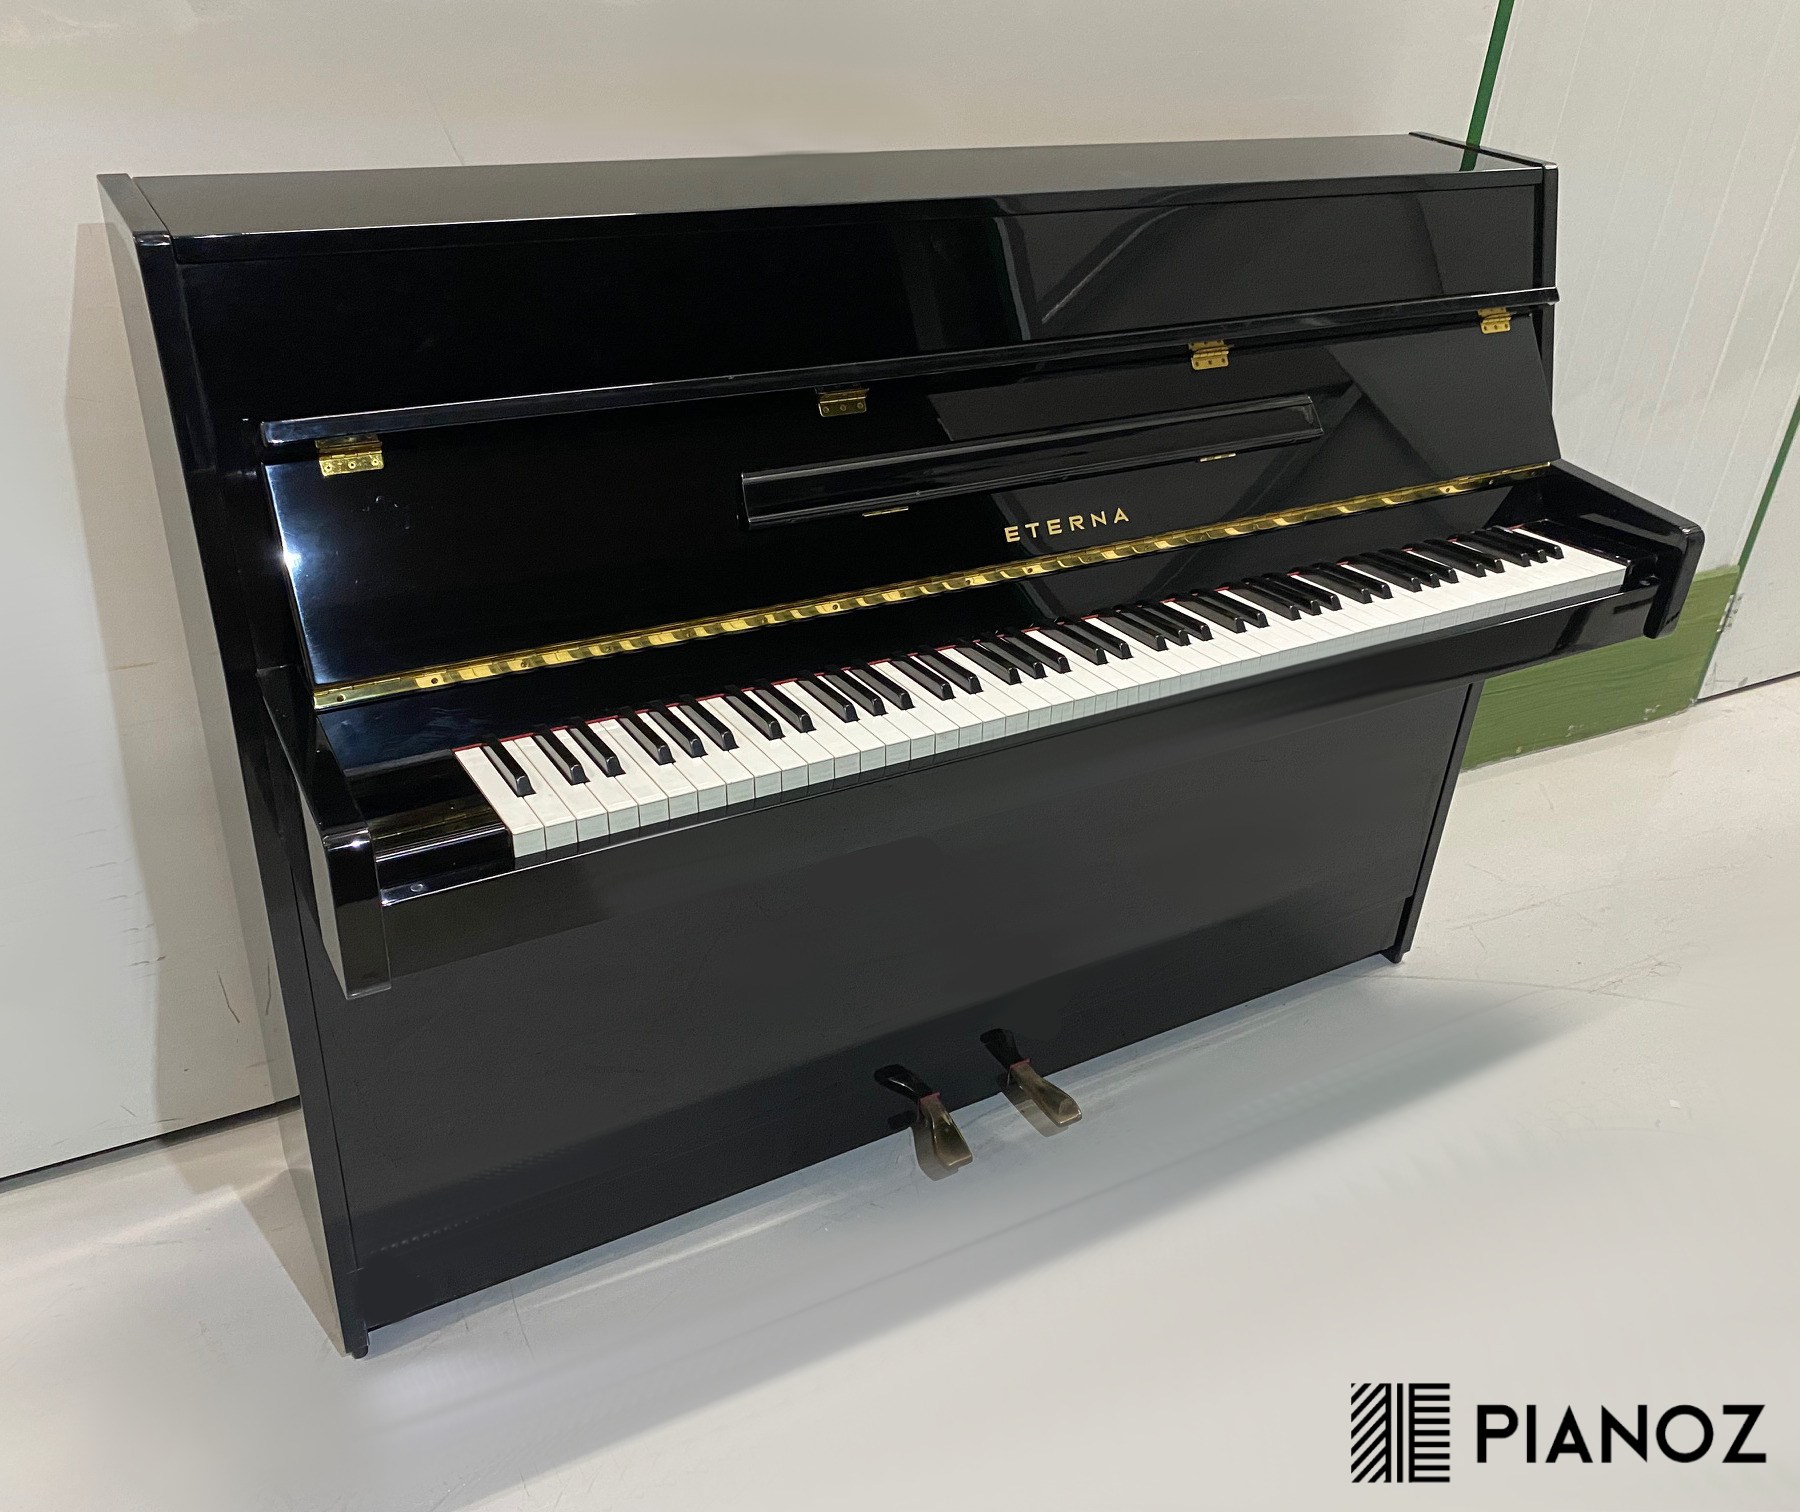 Yamaha Eterna Japanese Upright Piano piano for sale in UK